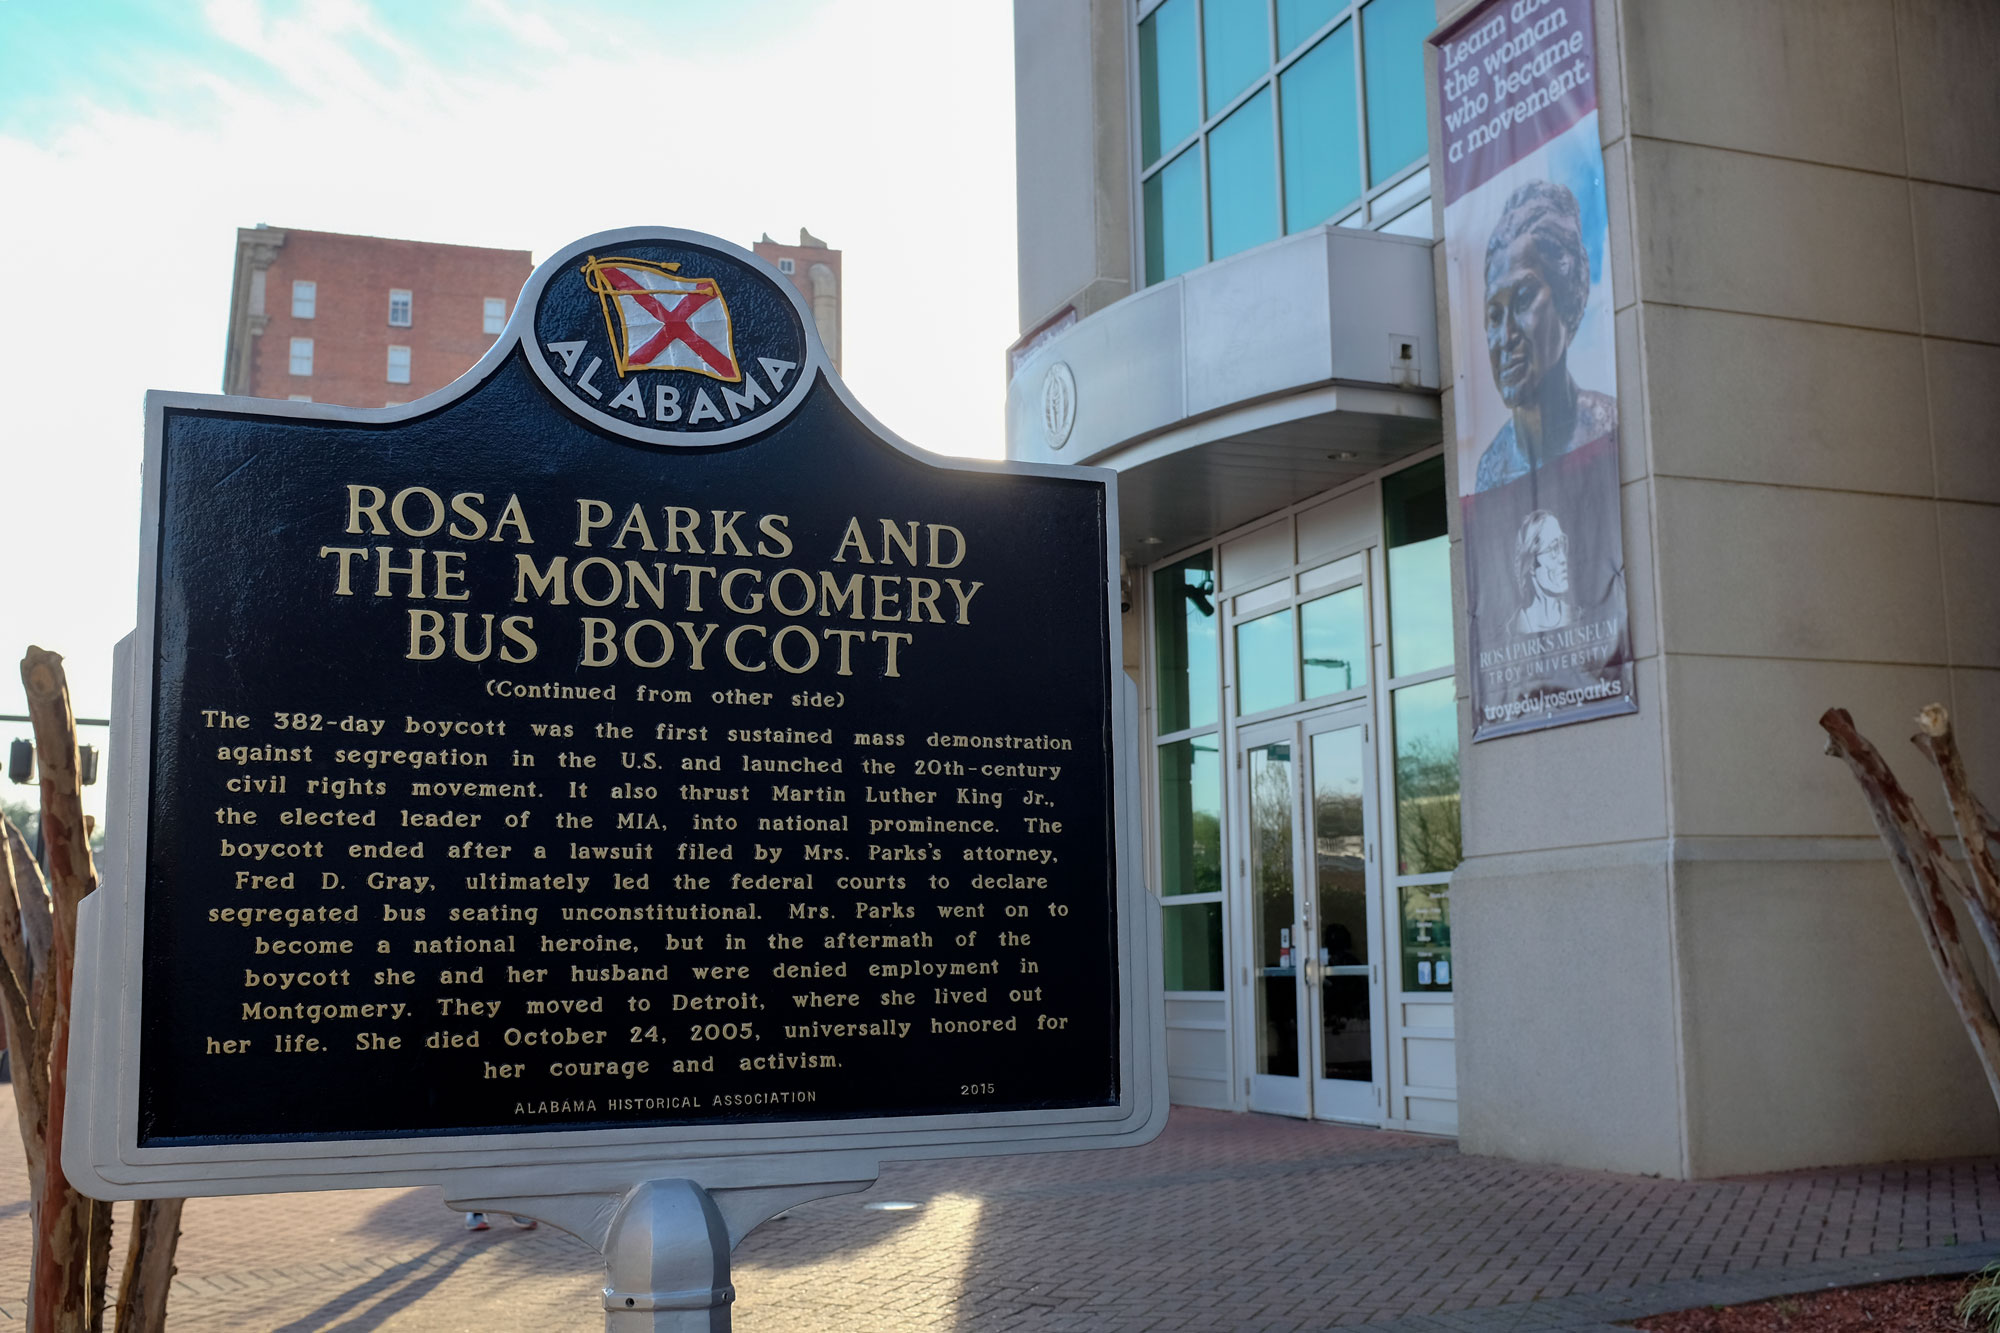 Exterior of Rosa Parks museum and sign explaining the bus boycott